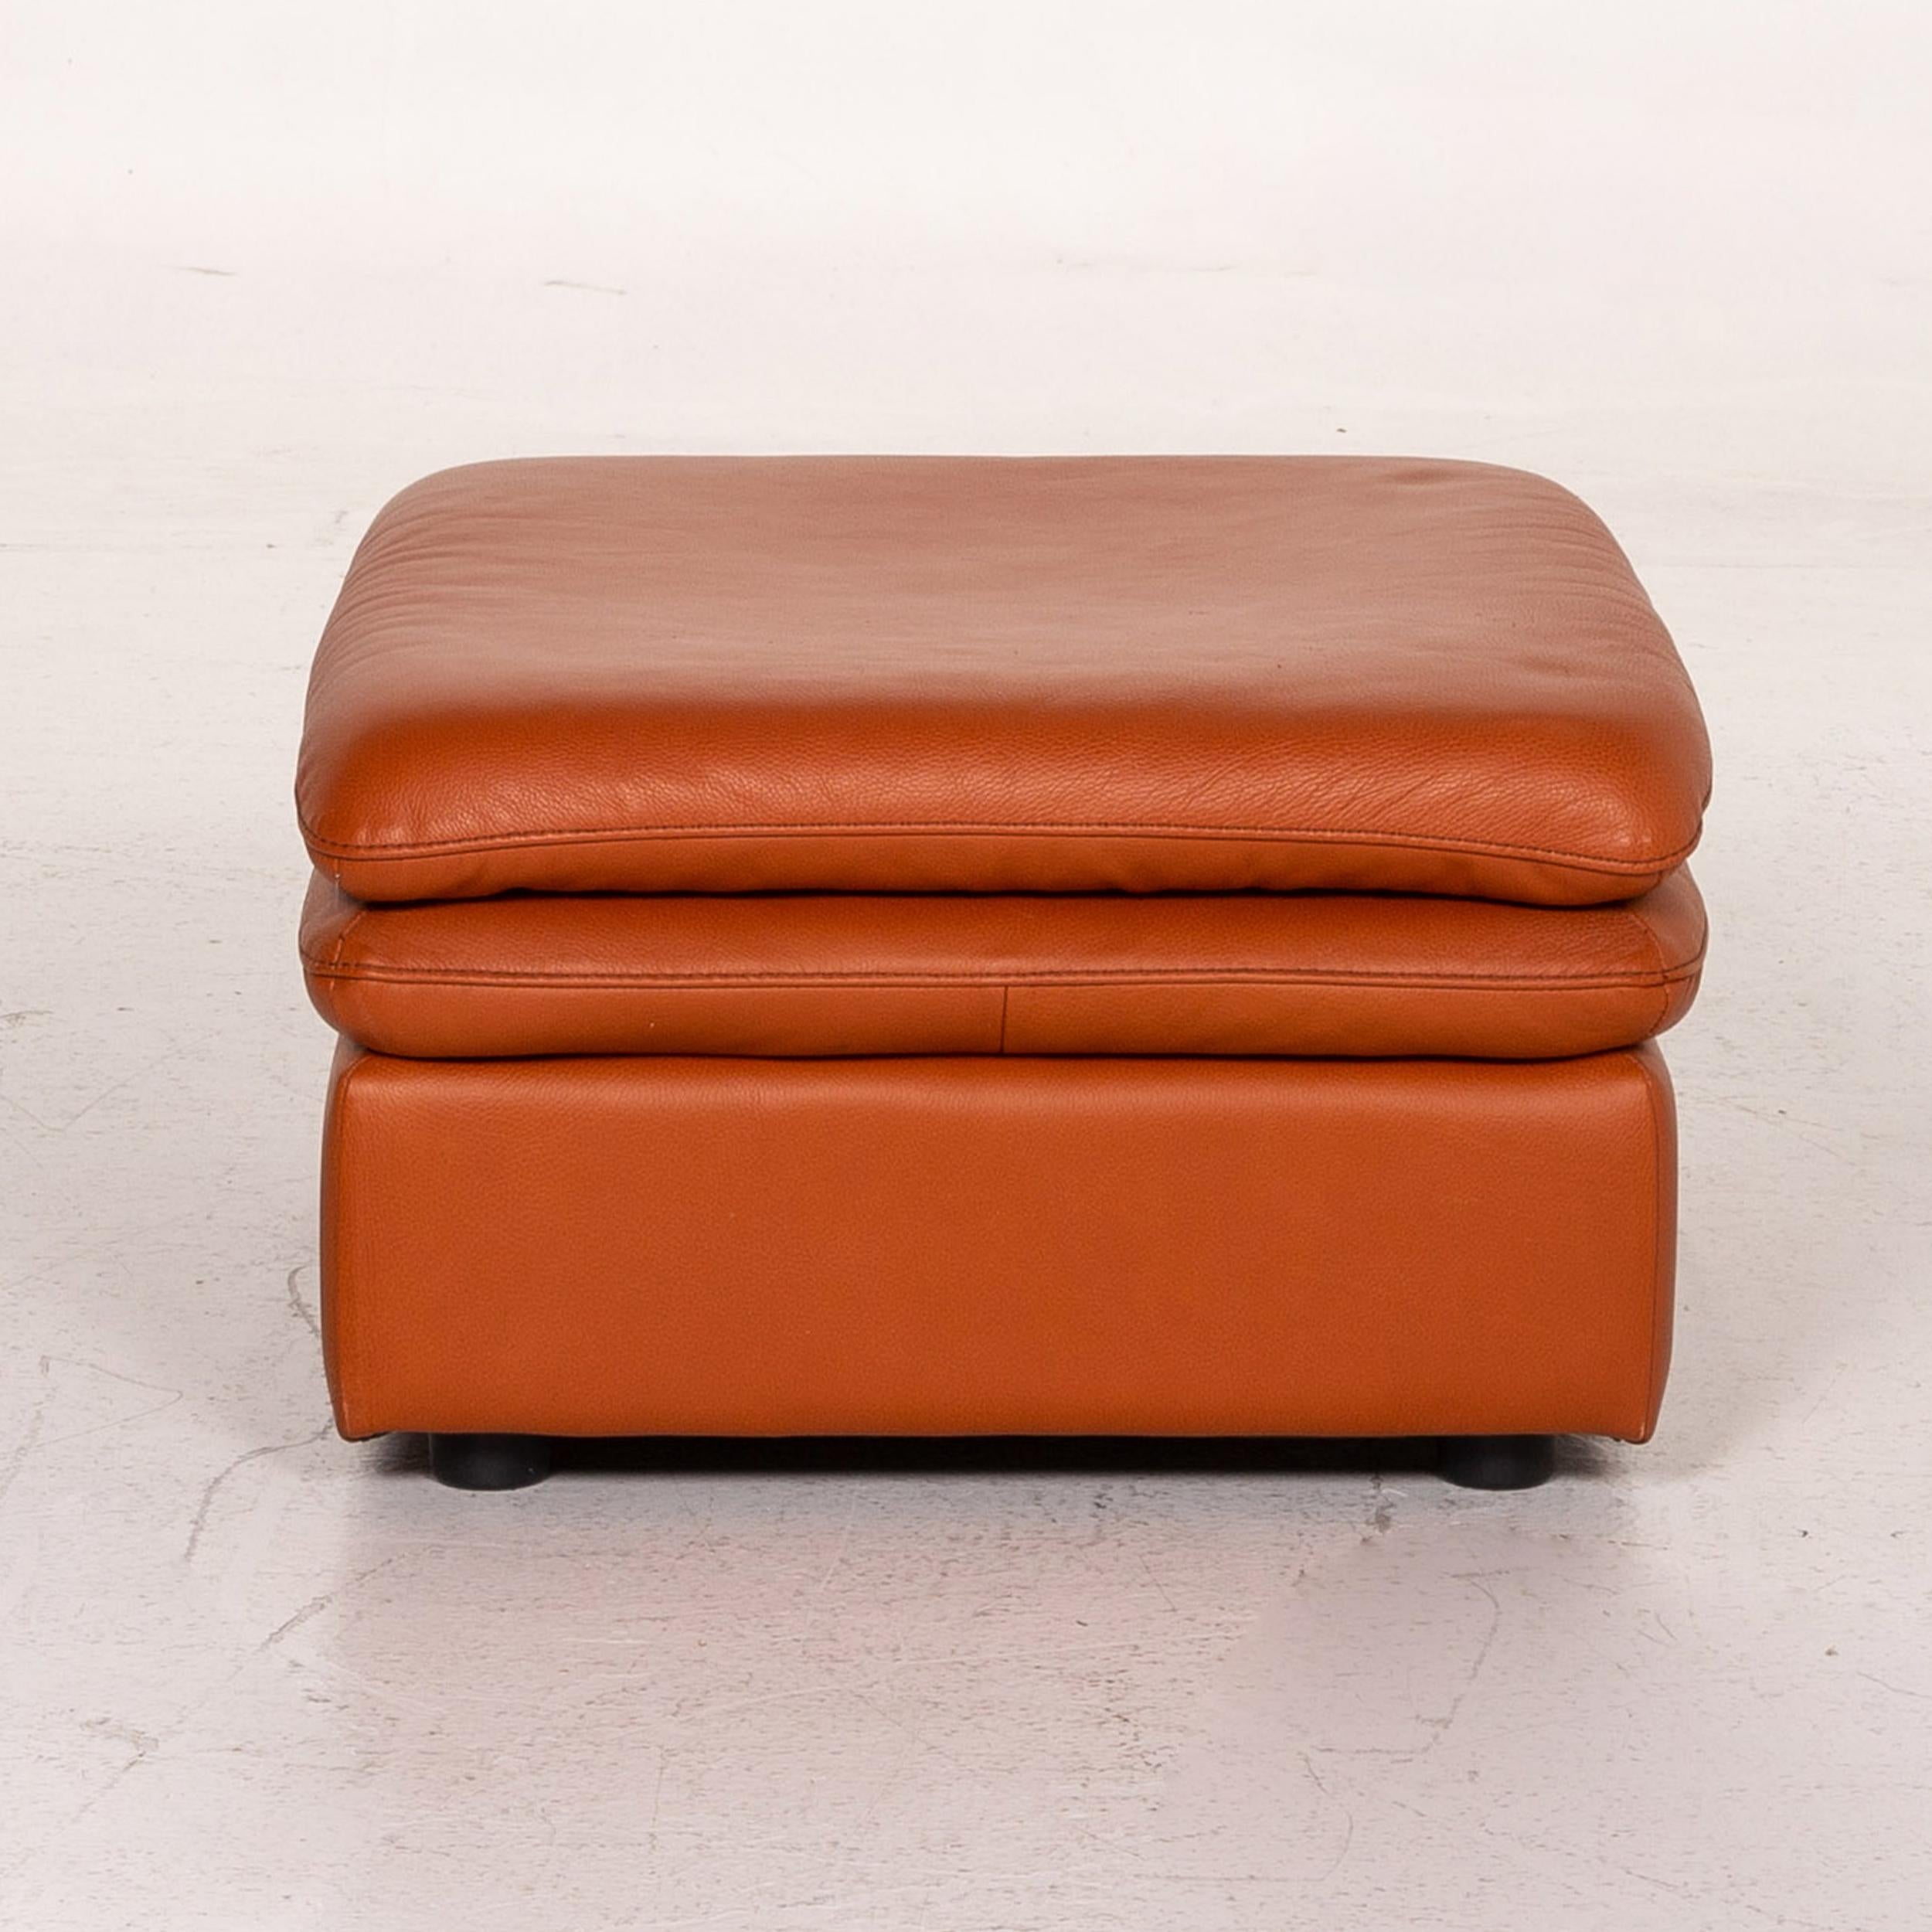 Natuzzi Leather Stool Terracotta Orange Ottoman In Excellent Condition For Sale In Cologne, DE